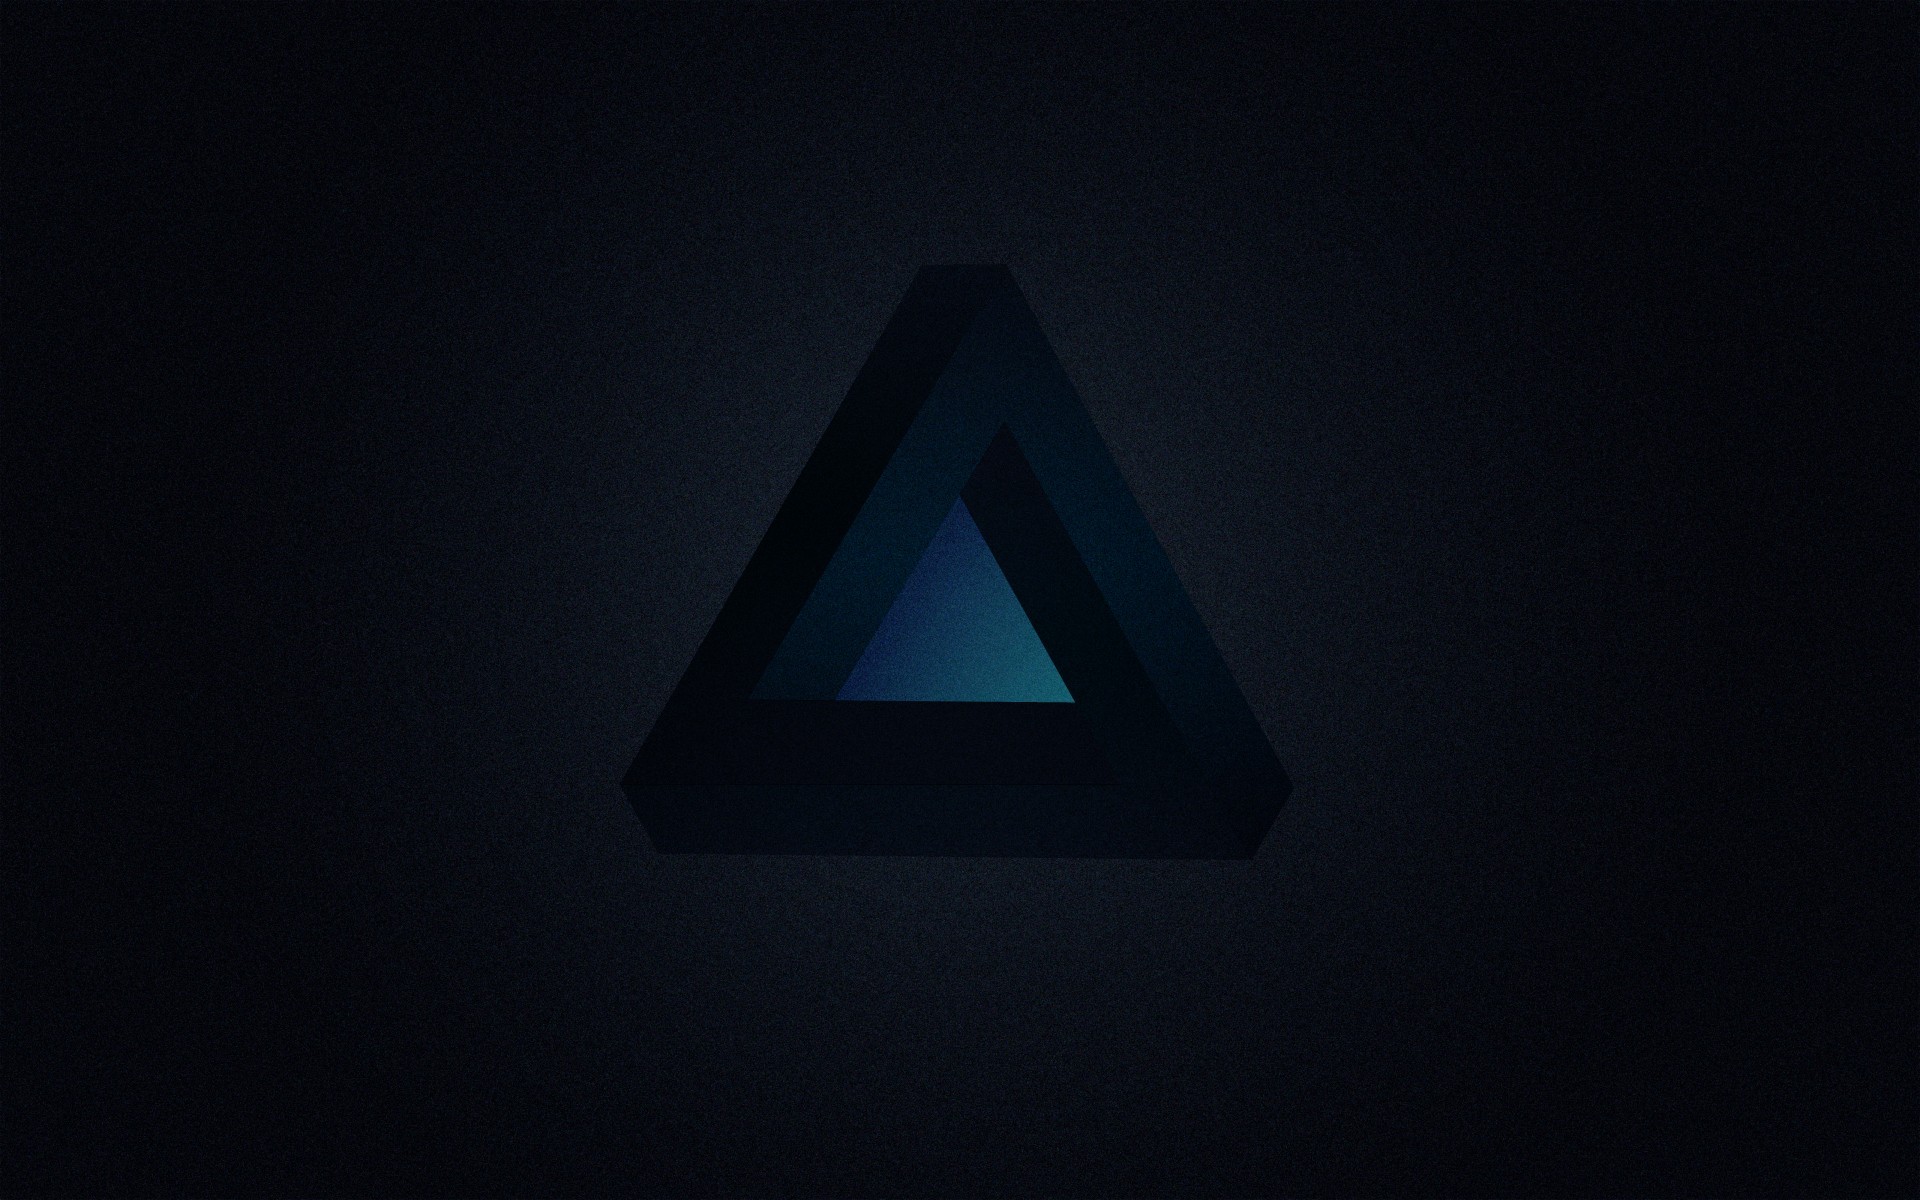 General 1920x1200 minimalism Penrose triangle triangle dark digital art simple background